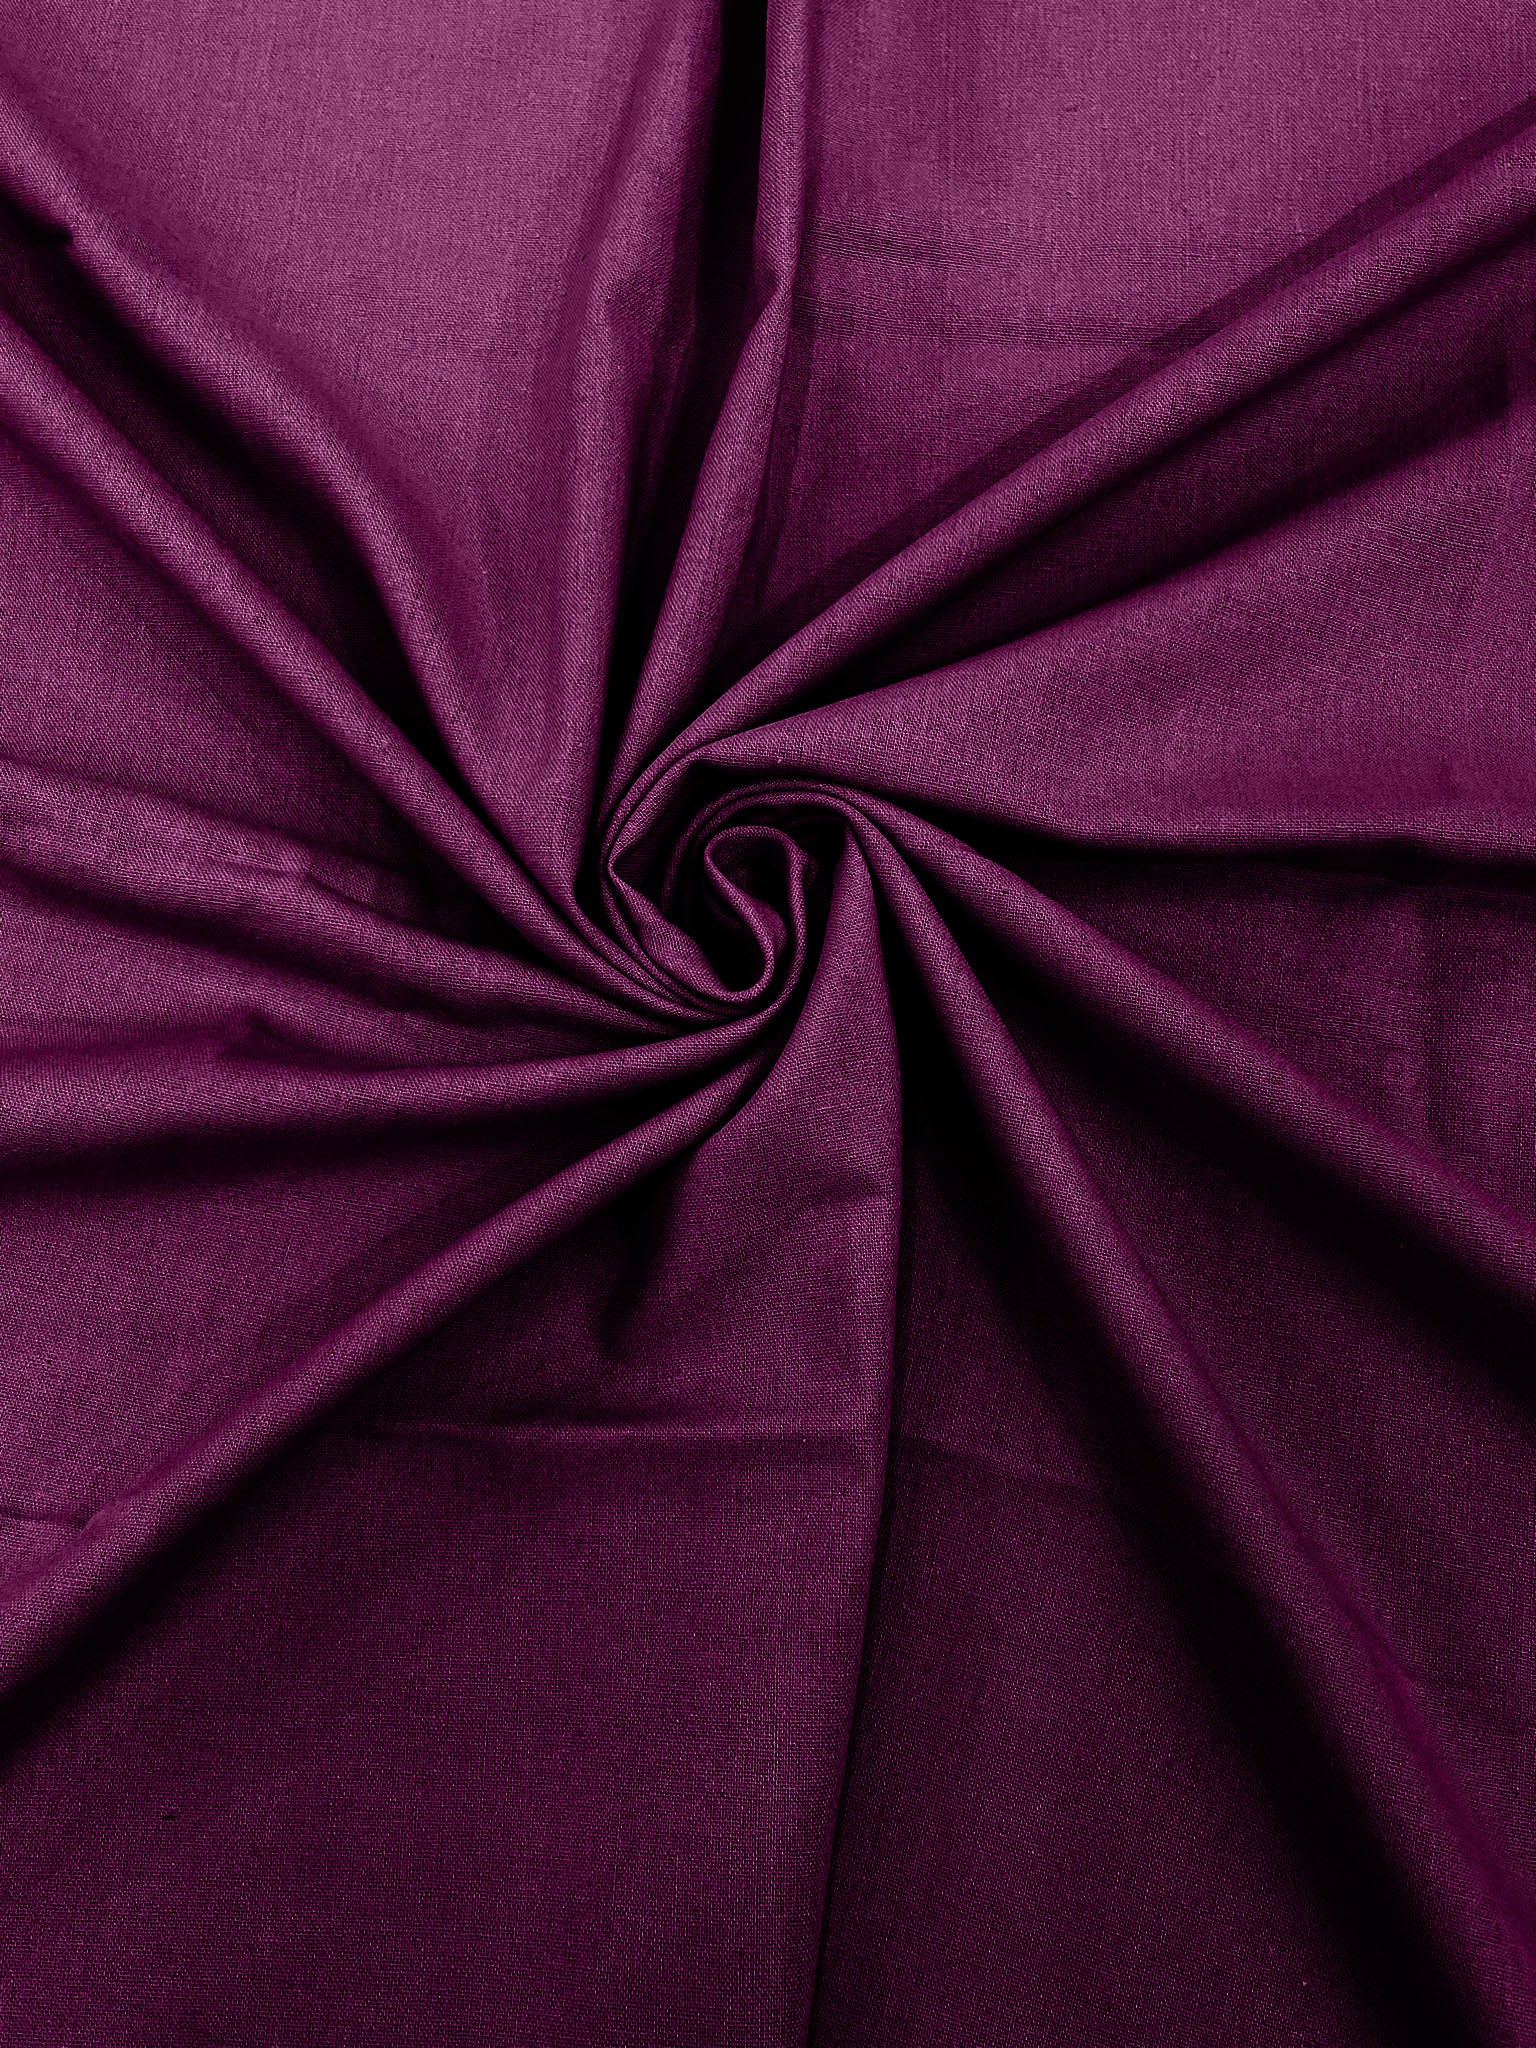 Magenta Medium Weight Natural Linen Fabric/50 " Wide/Clothing